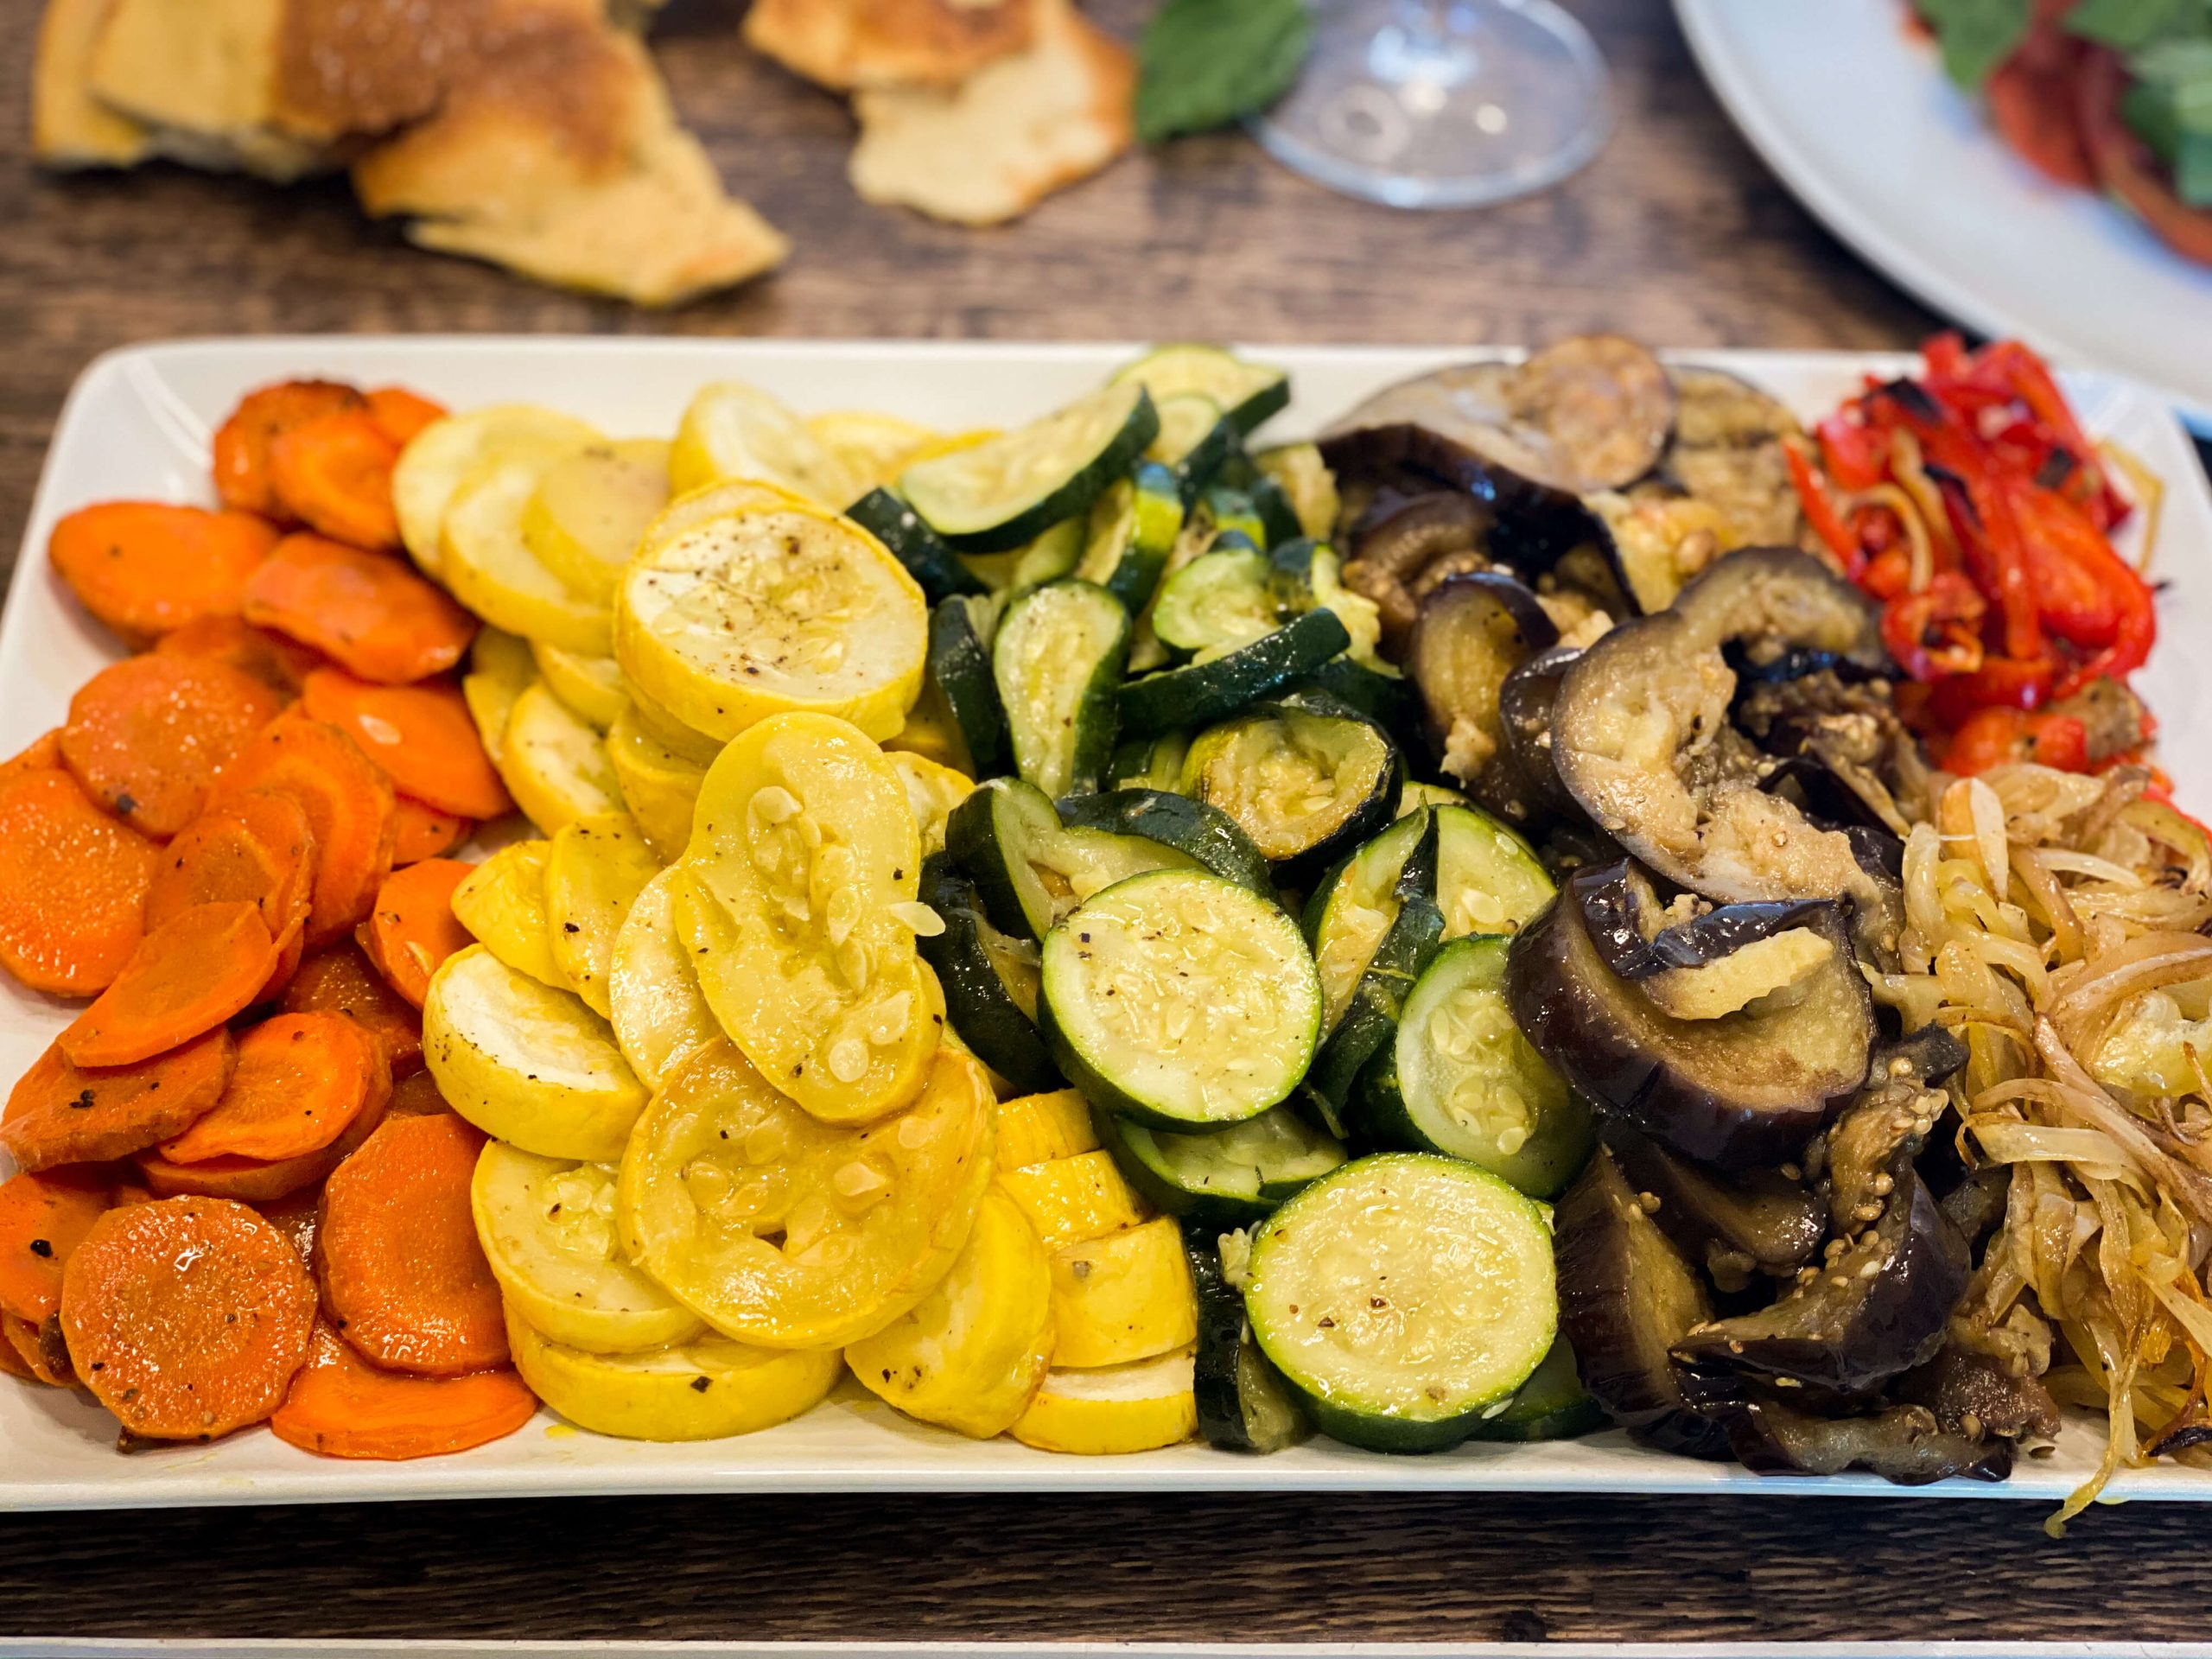 Roasted Vegetable Antipasto Platter served
